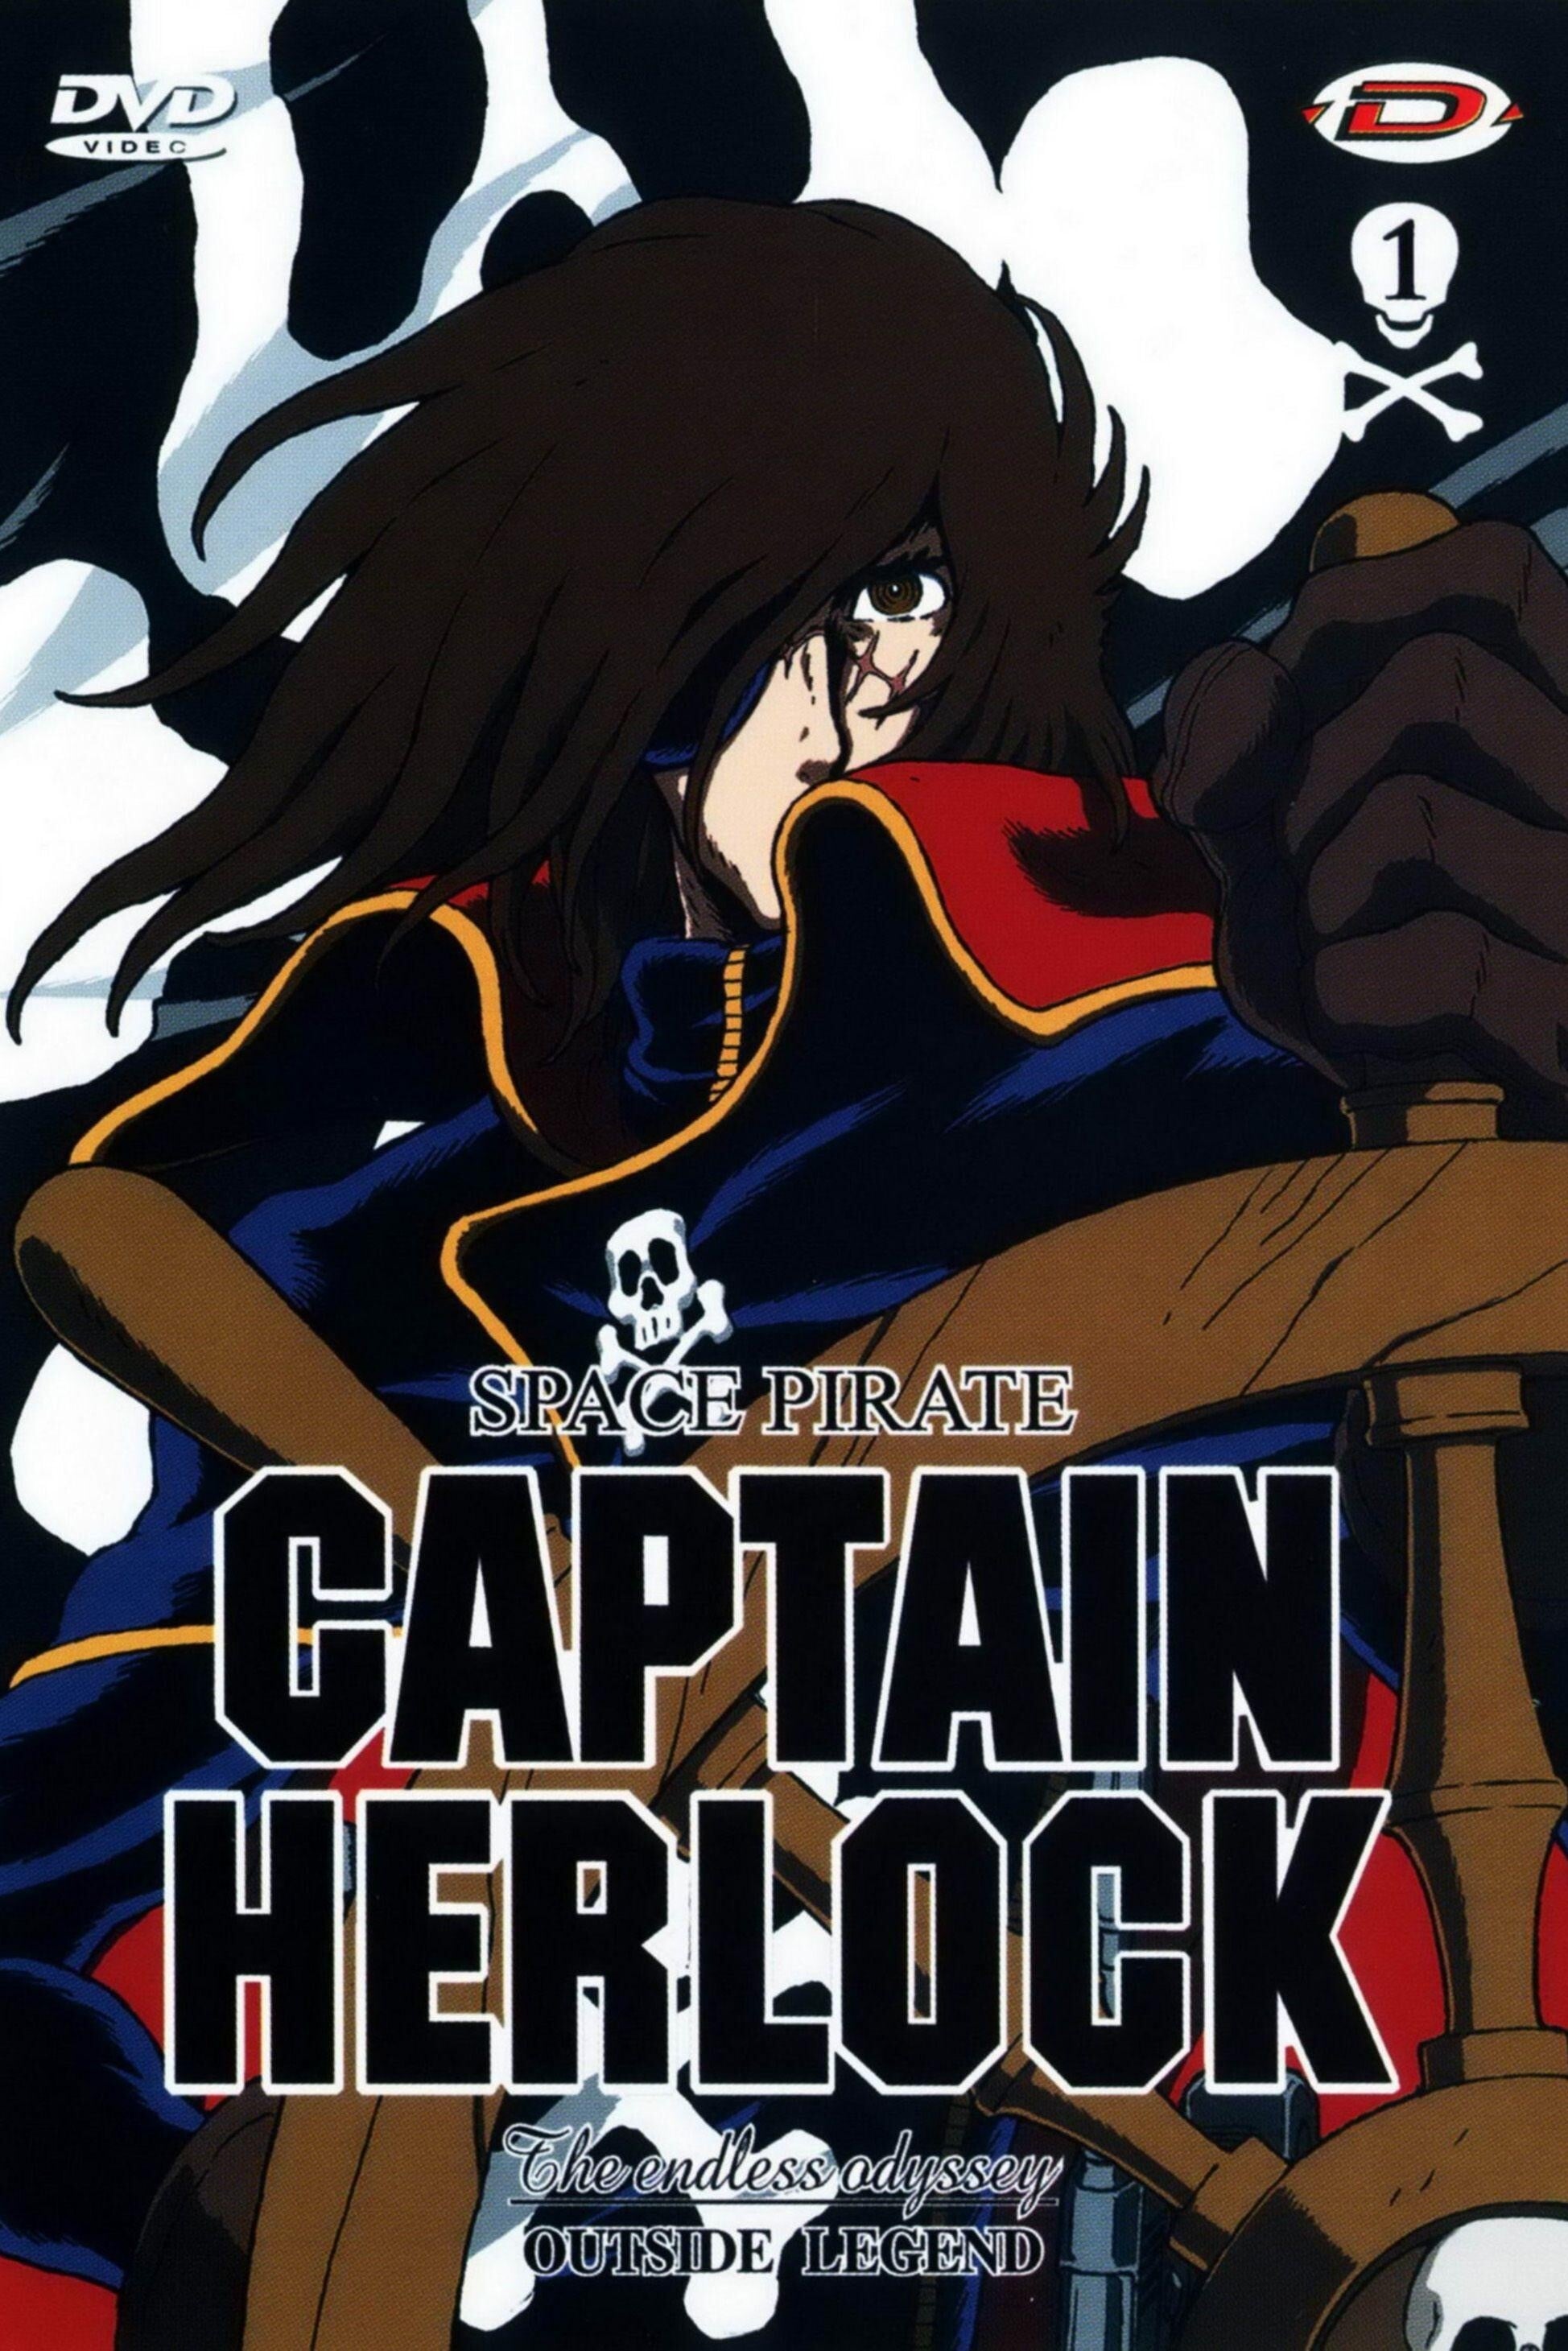 Captain Herlock: The Endless Odyssey